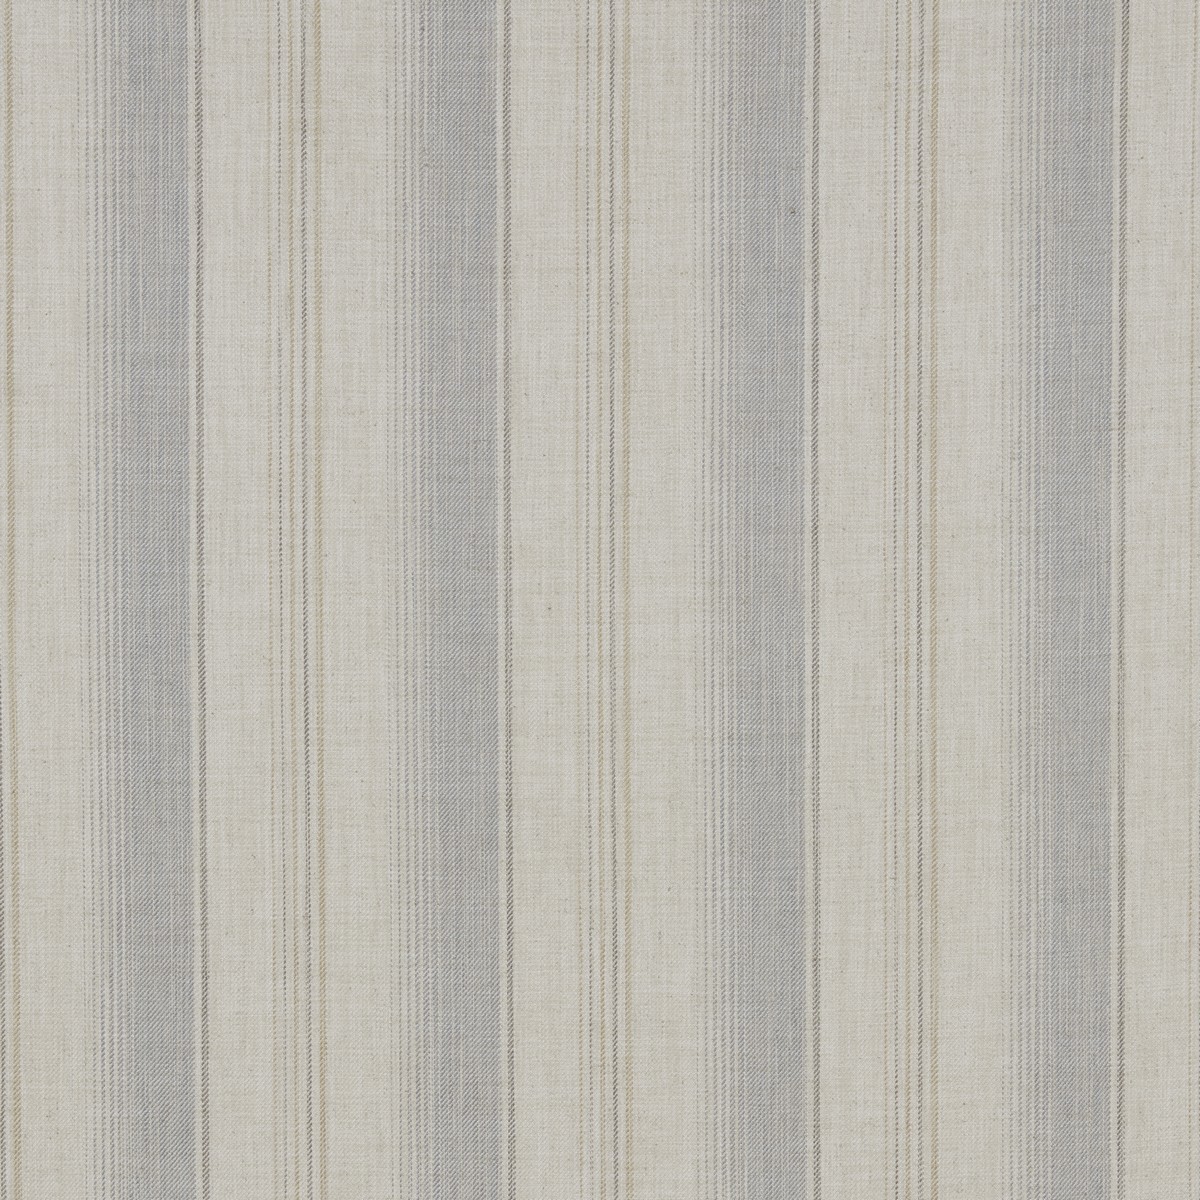 Sackville Stripe Denim Fabric by iLiv